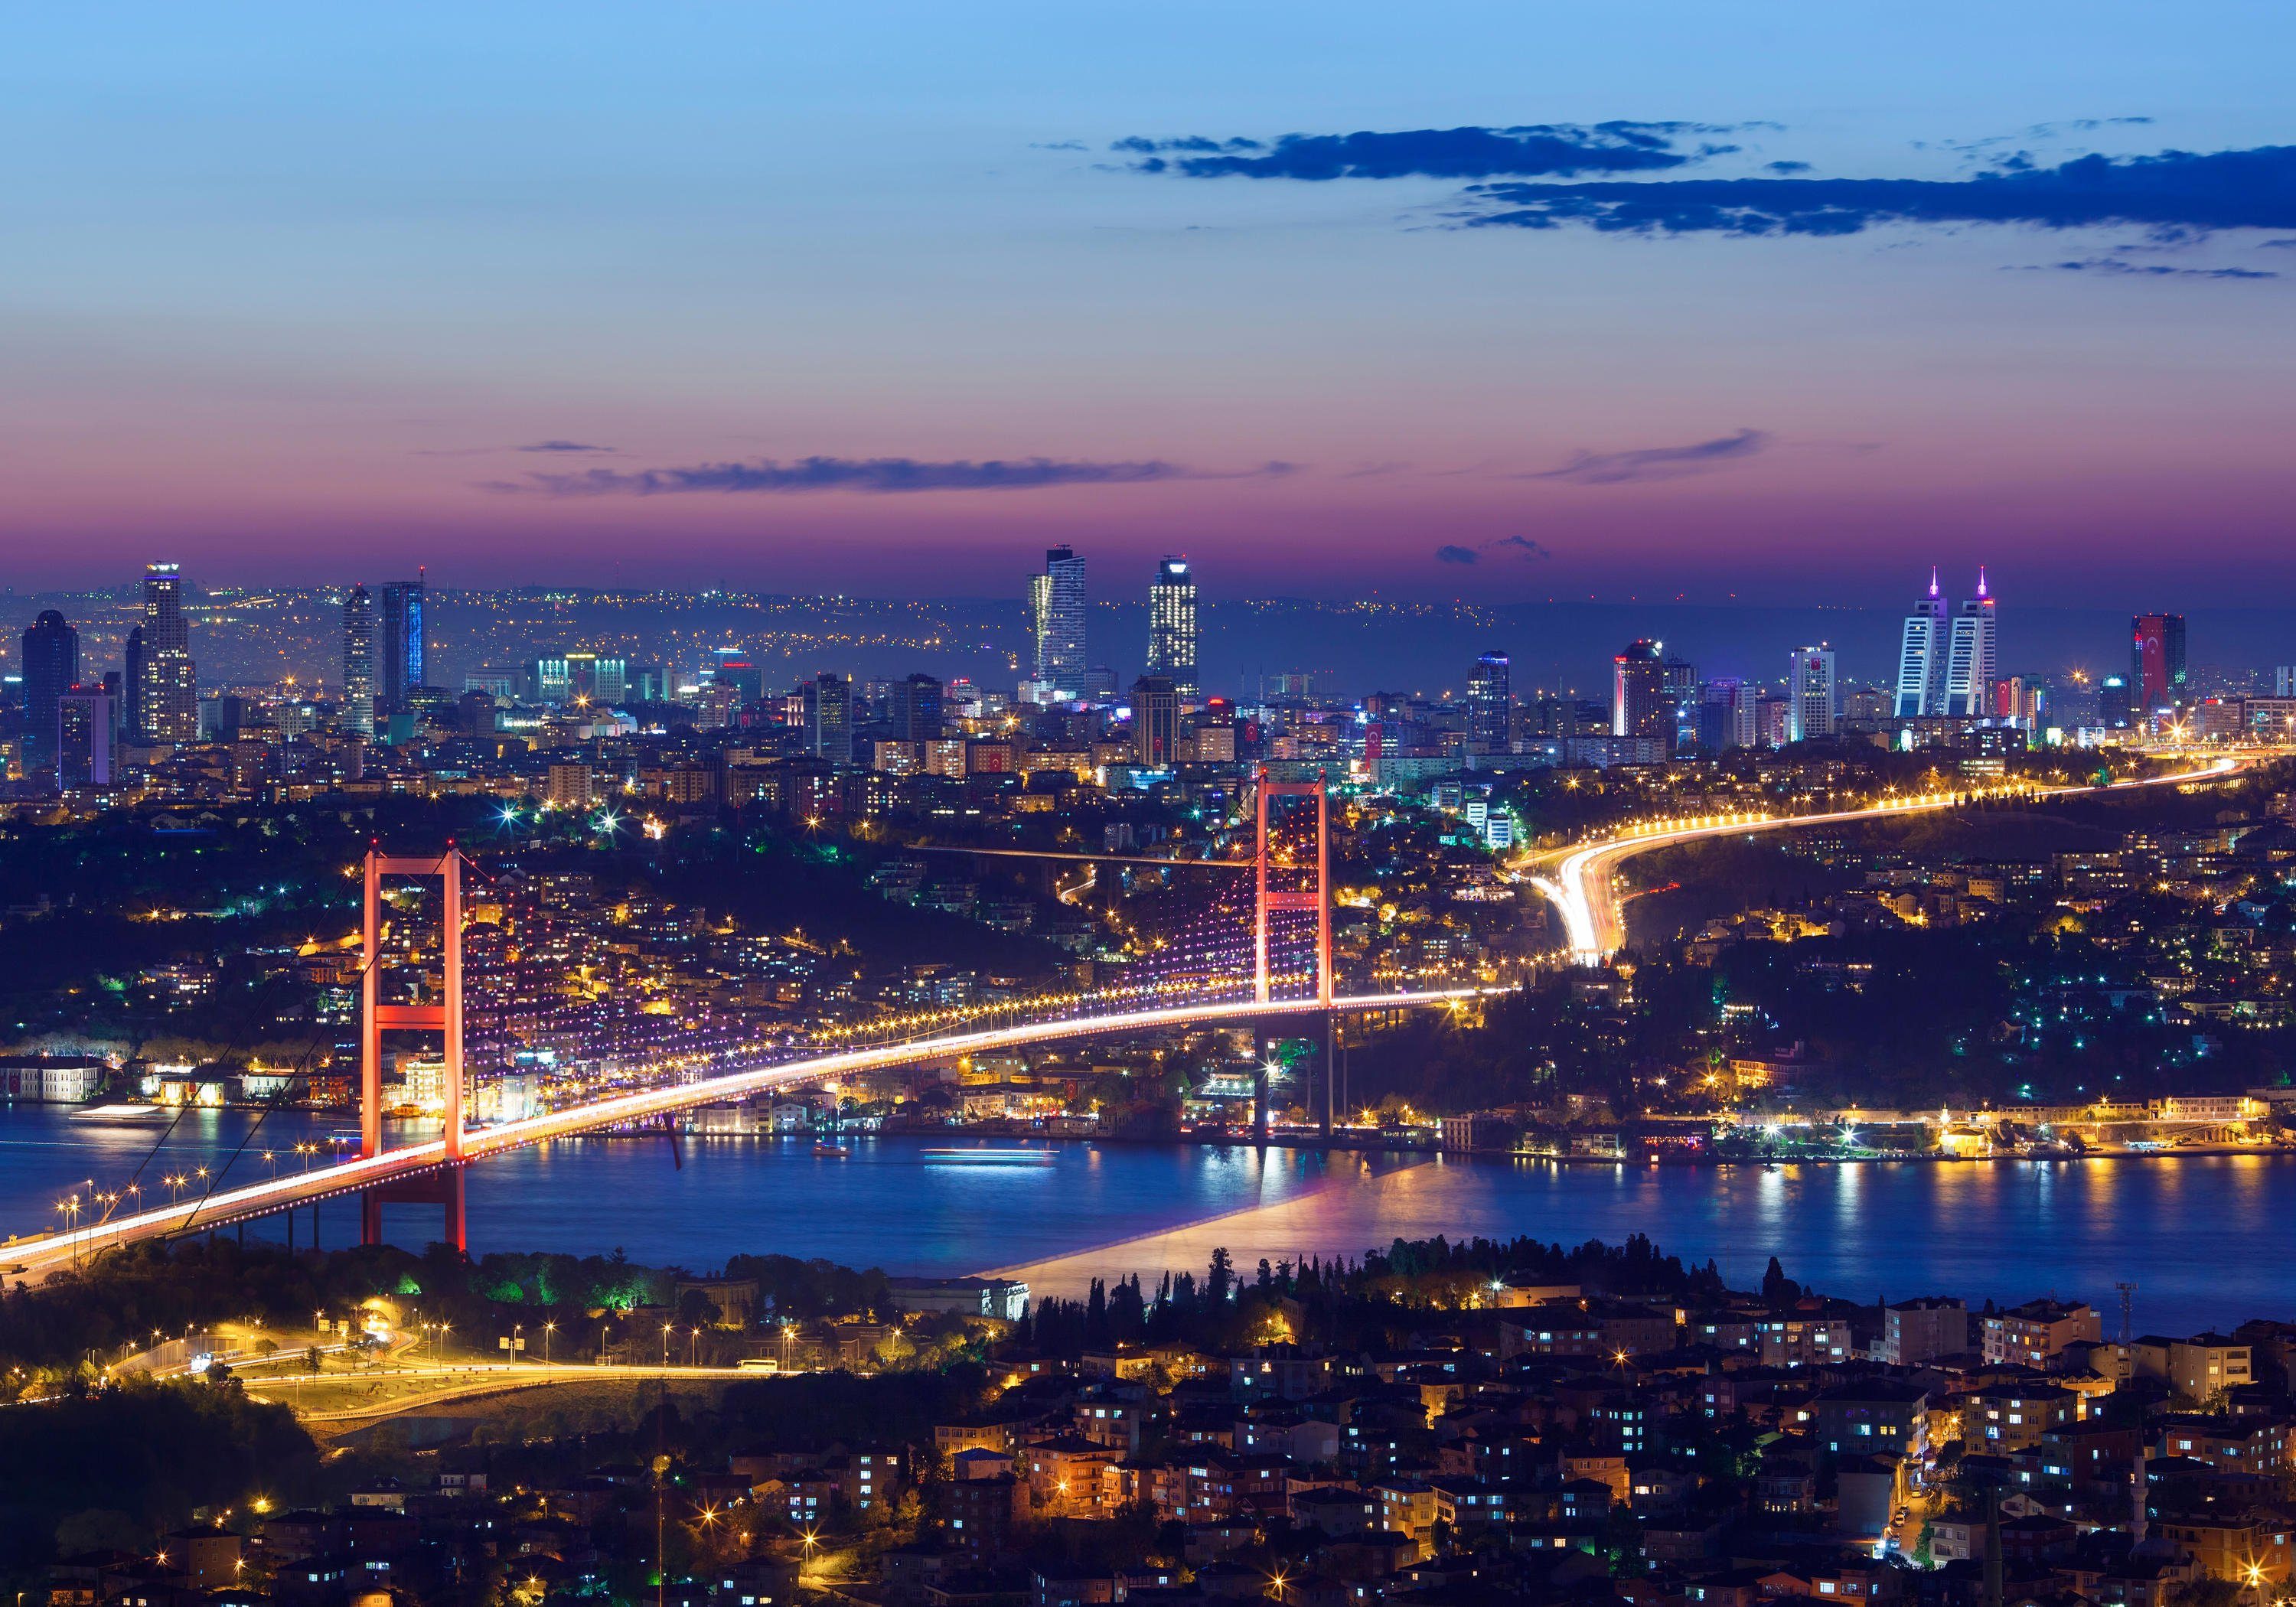 Nacht, bei matt, Vliestapete Istanbul glatt, wandmotiv24 Wandtapete, Fototapete Motivtapete,